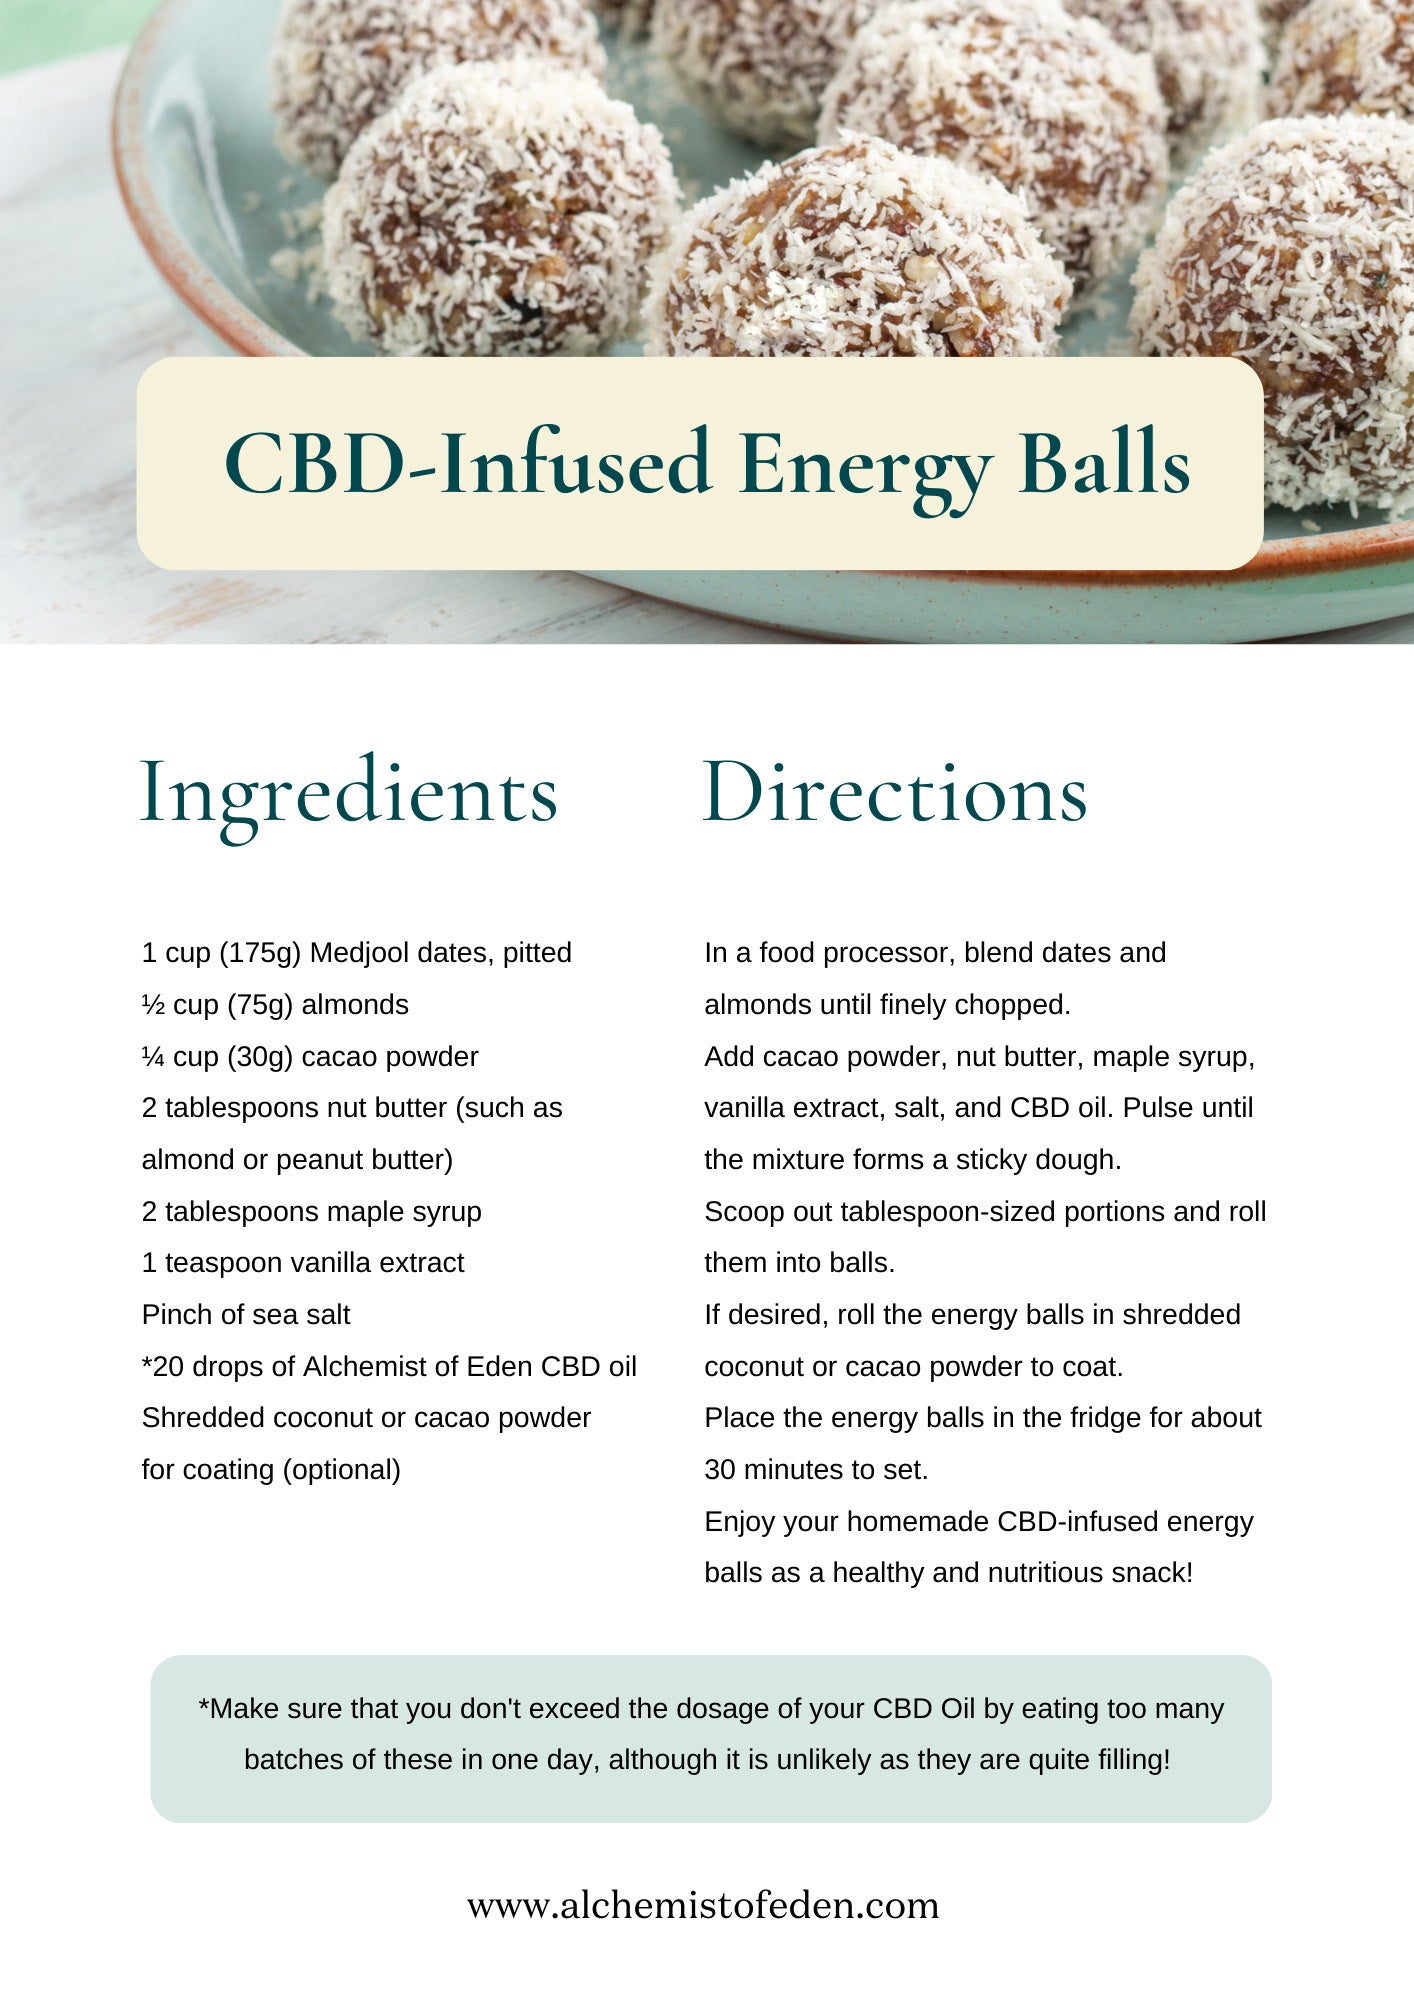 CBD-infused energy balls from alchemist of eden